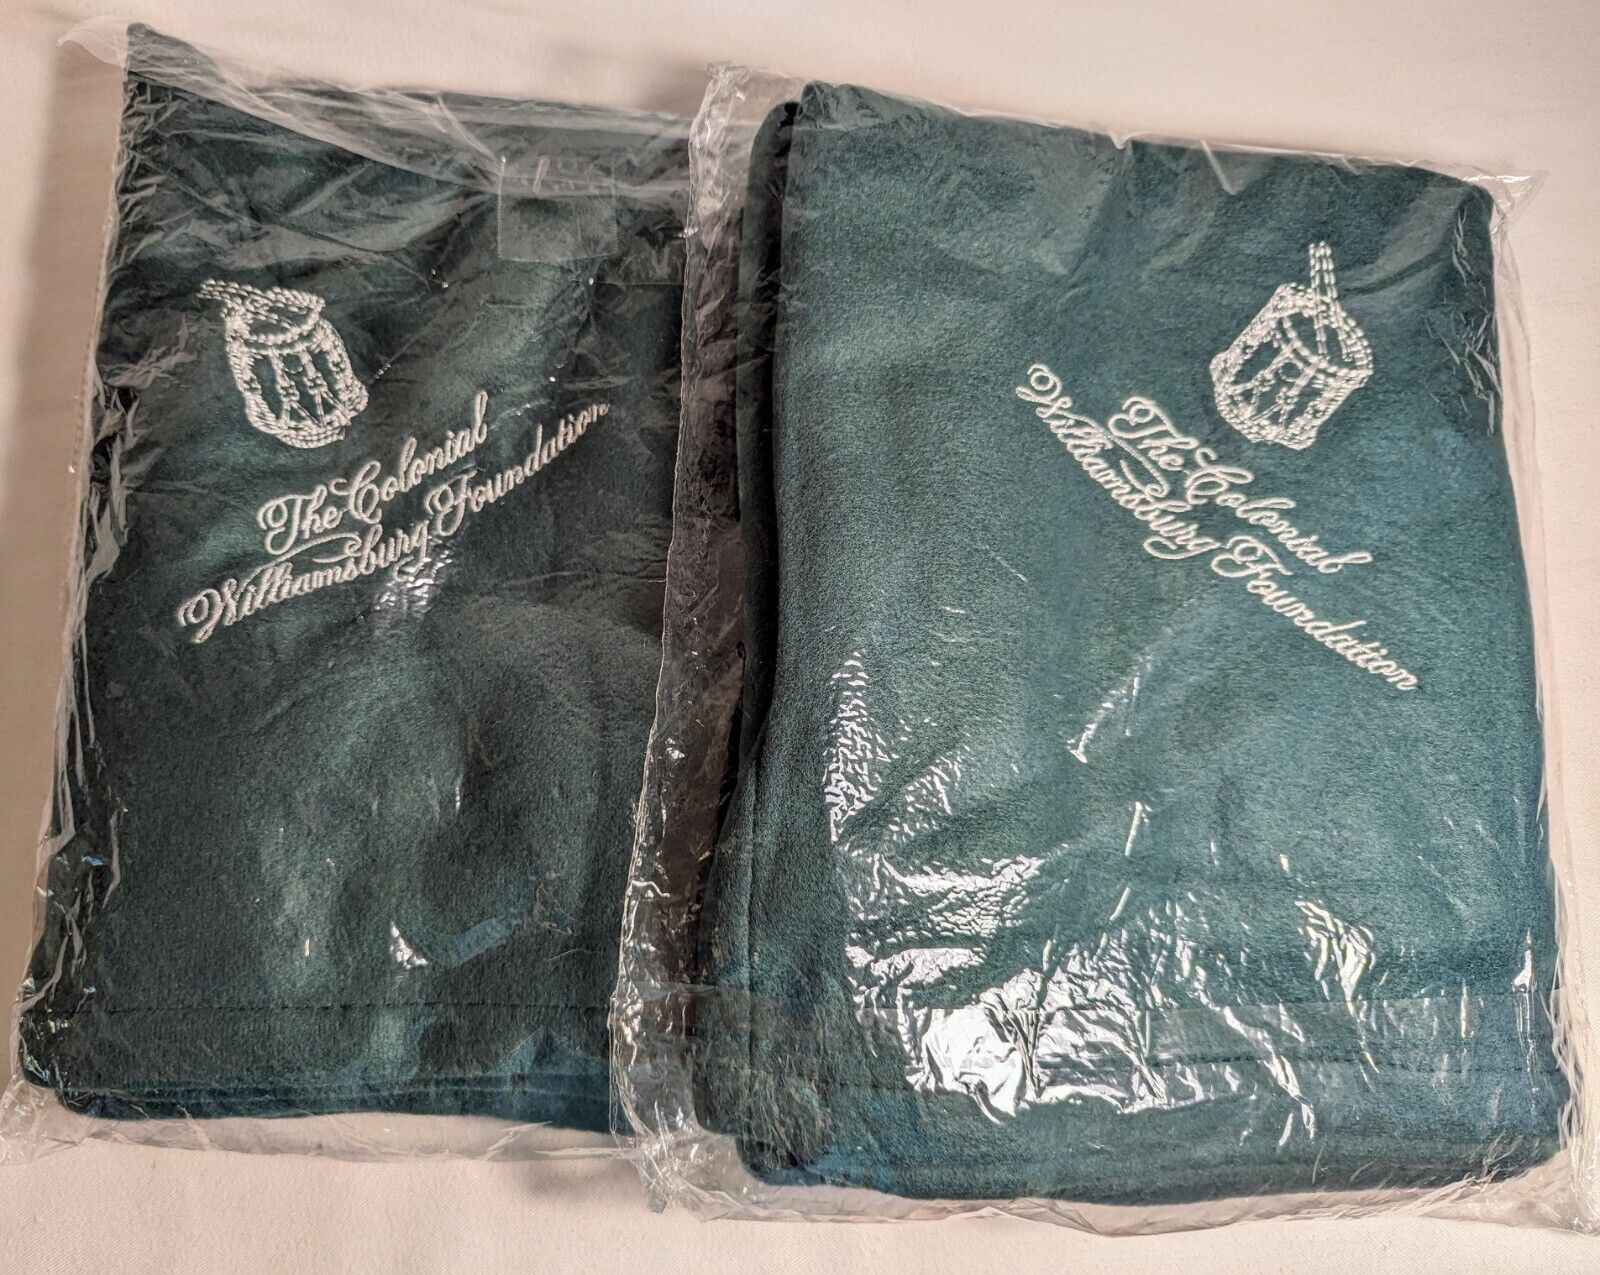 Colonial Williamsburg Foundation Throw Blanket Lap Blanket Set of 2 NIP 48x33